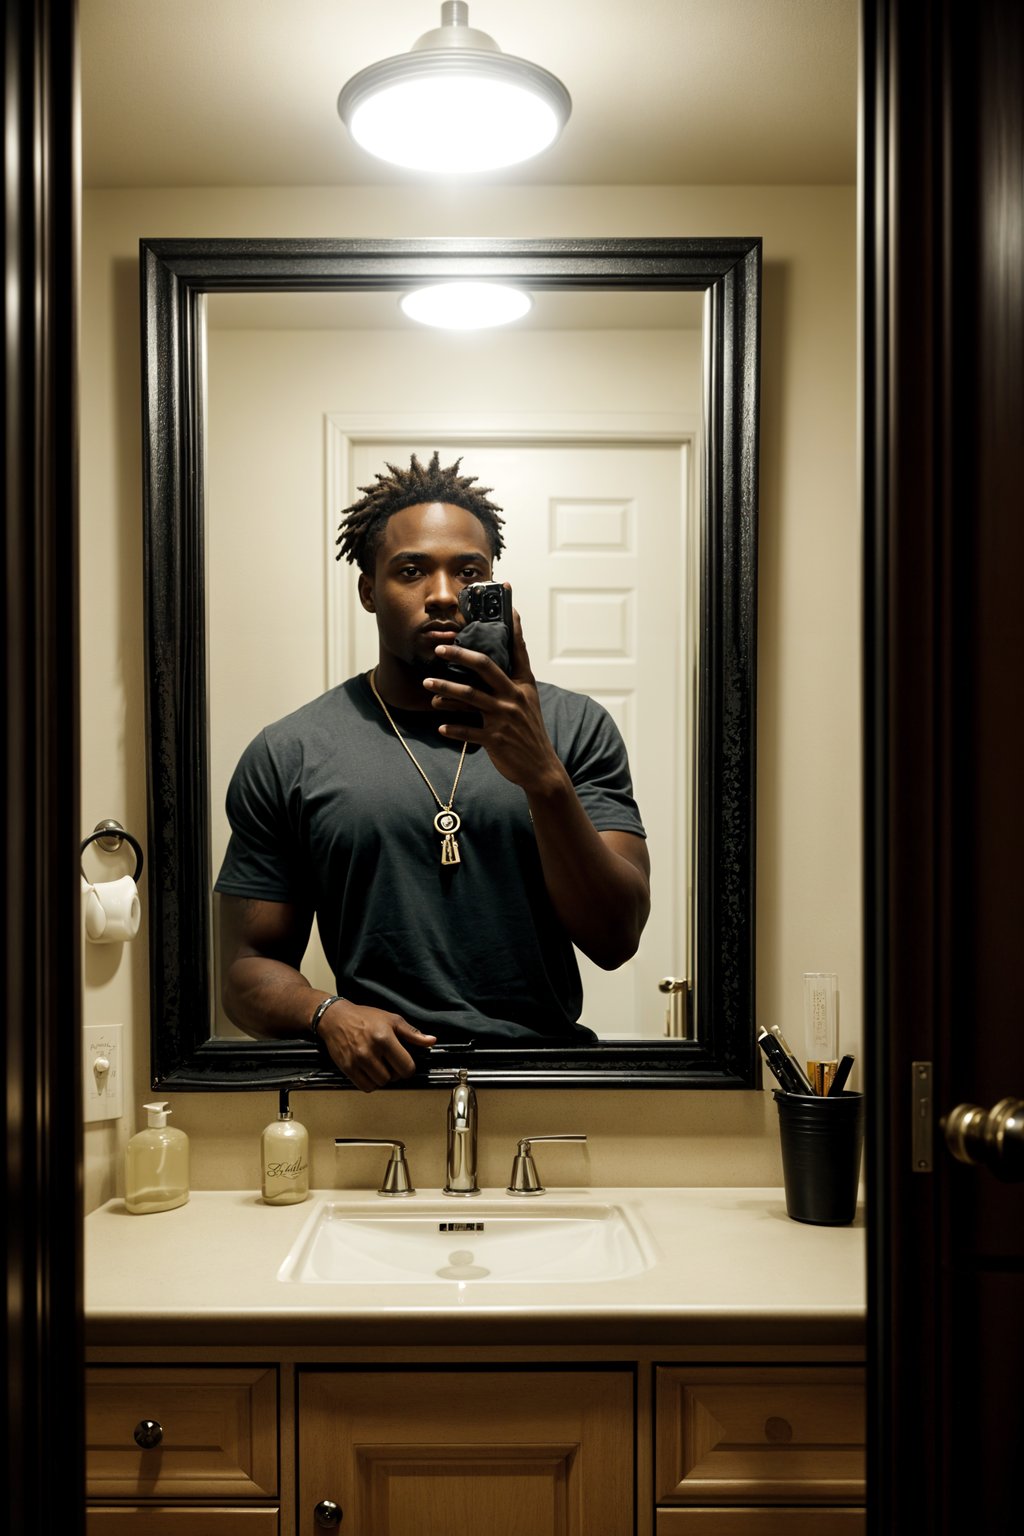 beautiful man taking a selfie in bathroom mirror